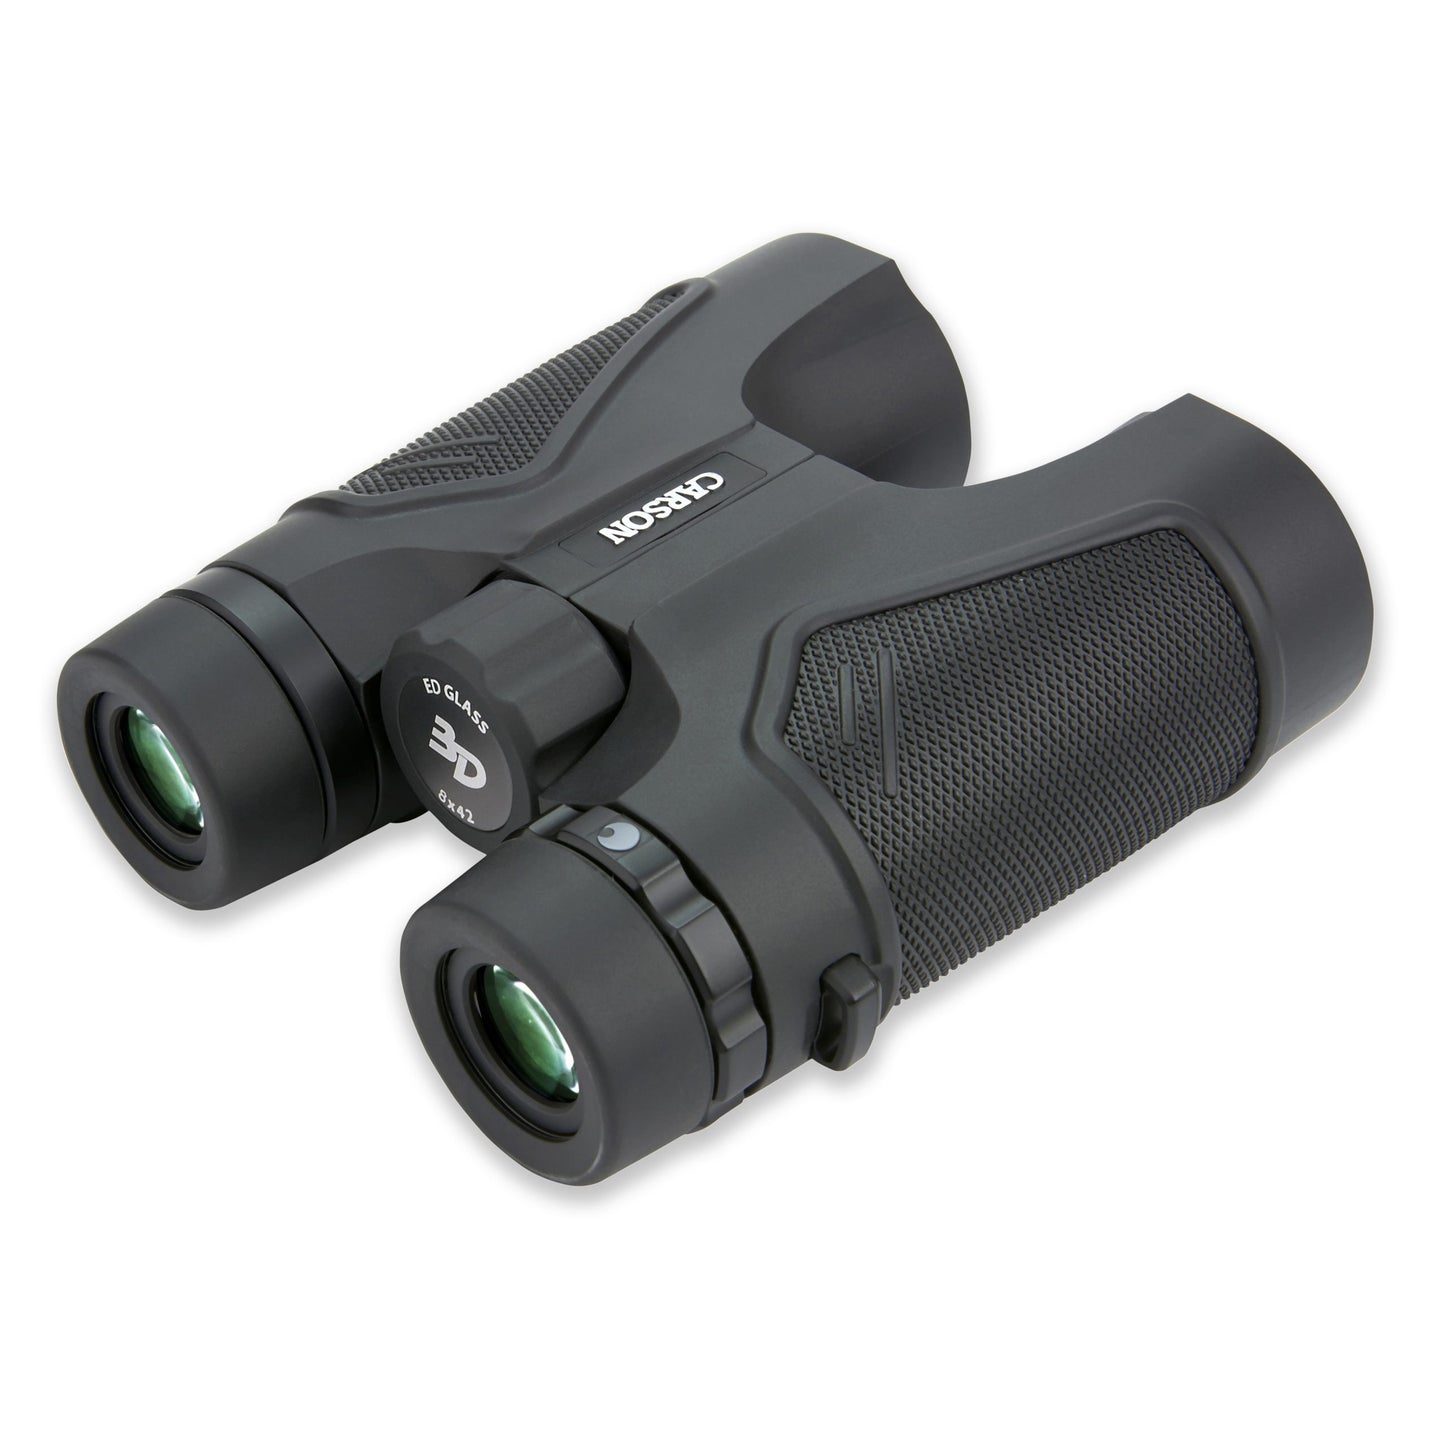 Carson 3D Series 8x42mm Full-Sized High Definition ED Glass Waterproof Binoculars TD-842ED